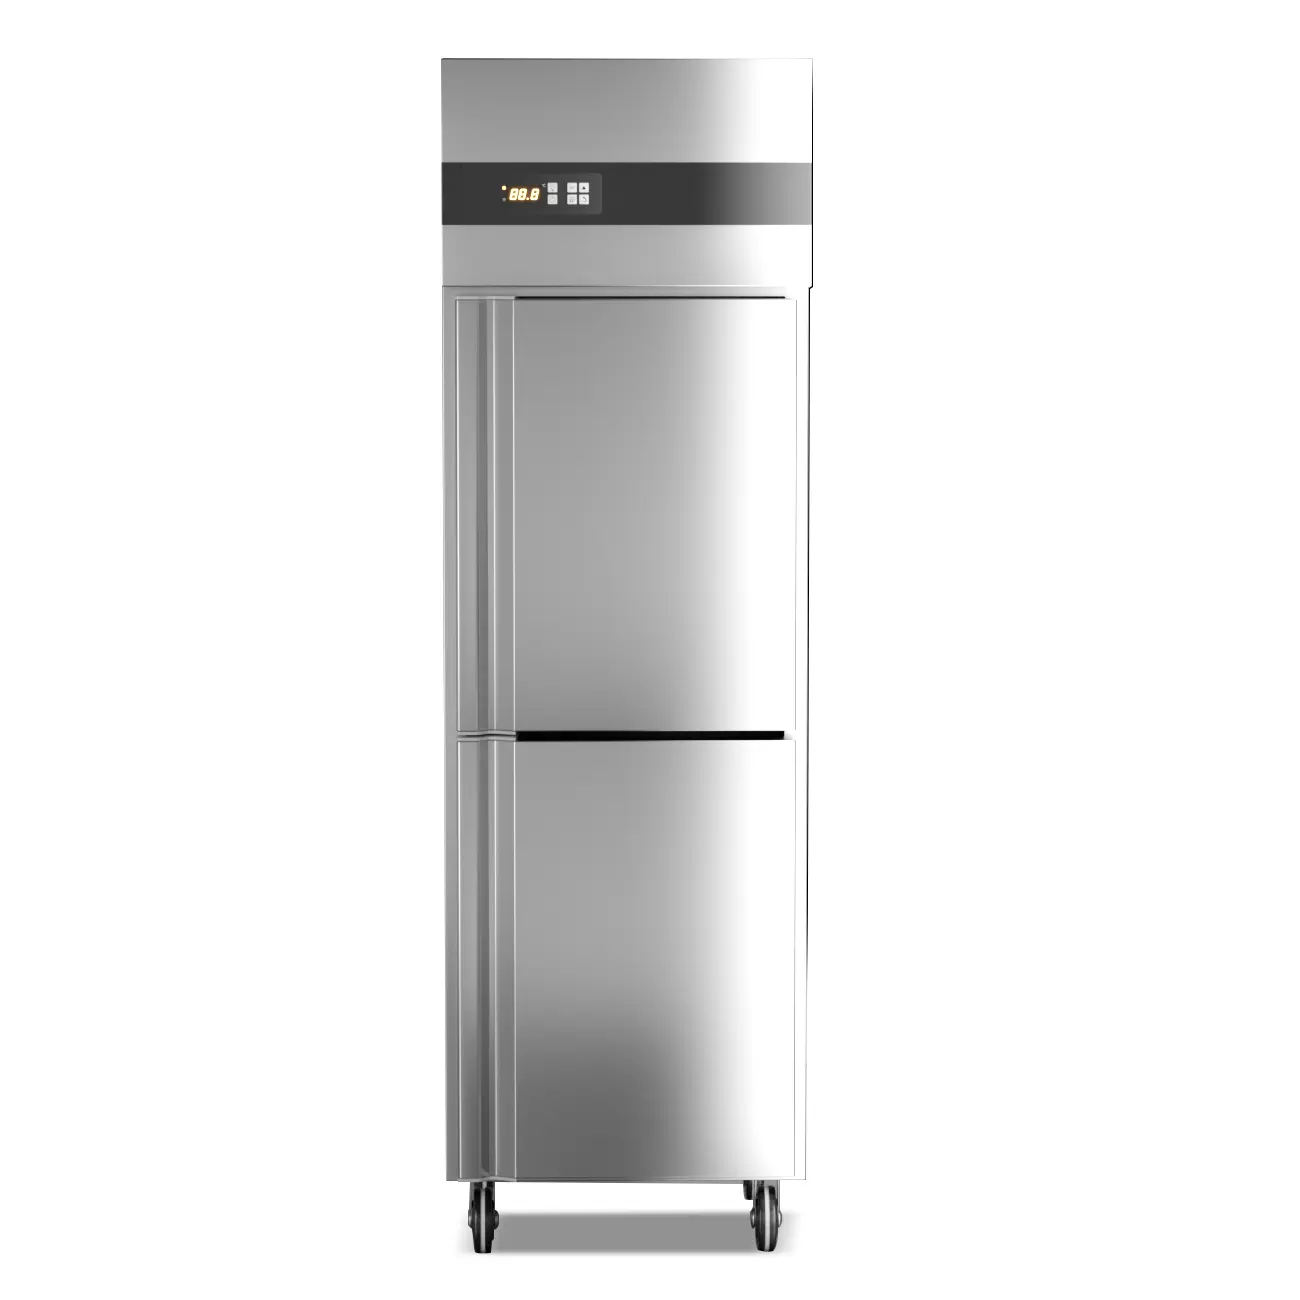 NEW ORIGINAL Best Price French Double Refrigerators DOOR FRIDG Upright Commercial INDUSTRI FREEZER Freezer Stainless Steel